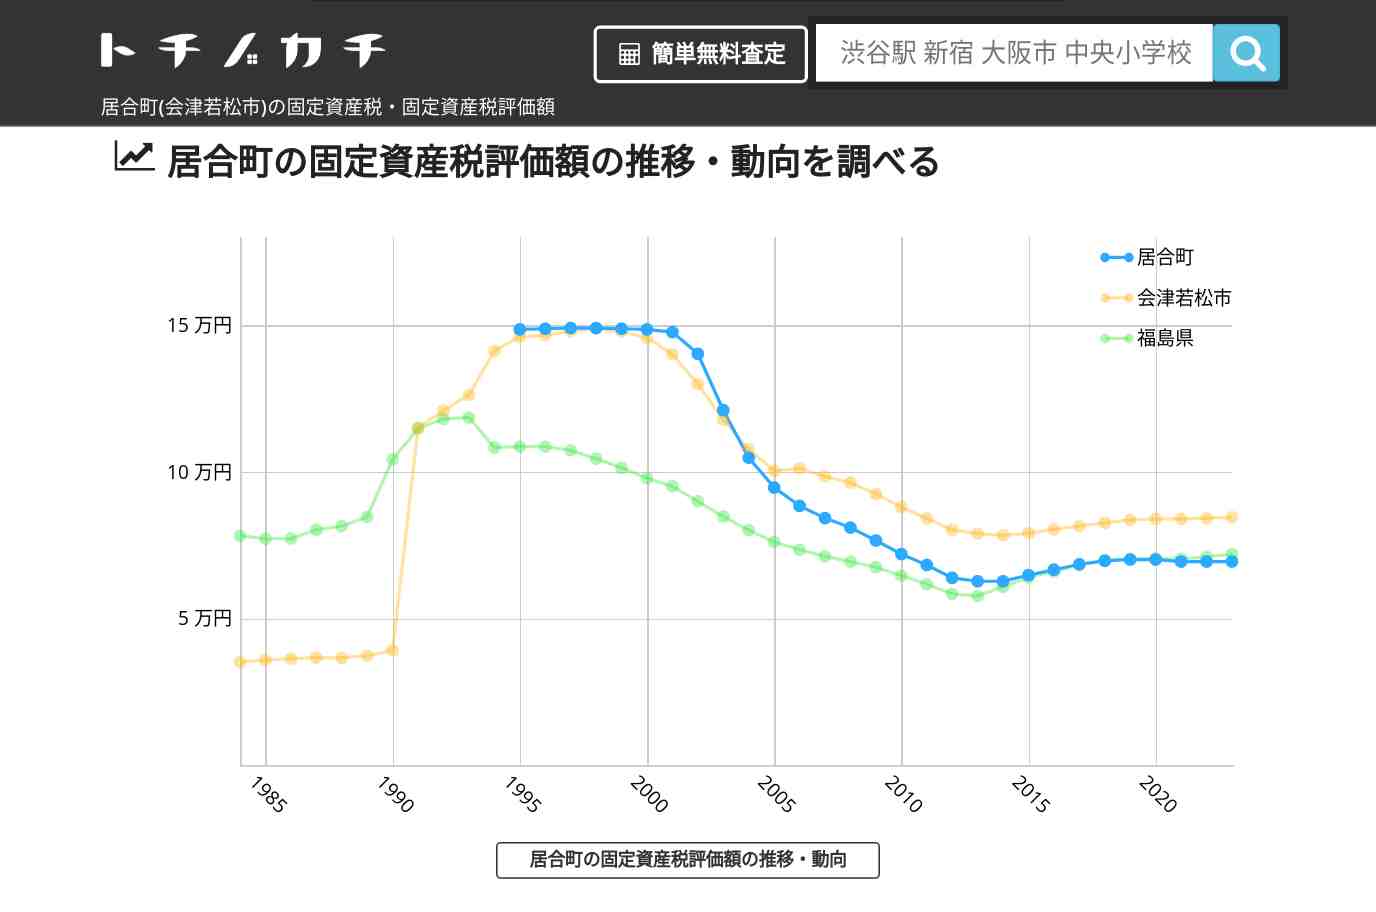 居合町(会津若松市)の固定資産税・固定資産税評価額 | トチノカチ